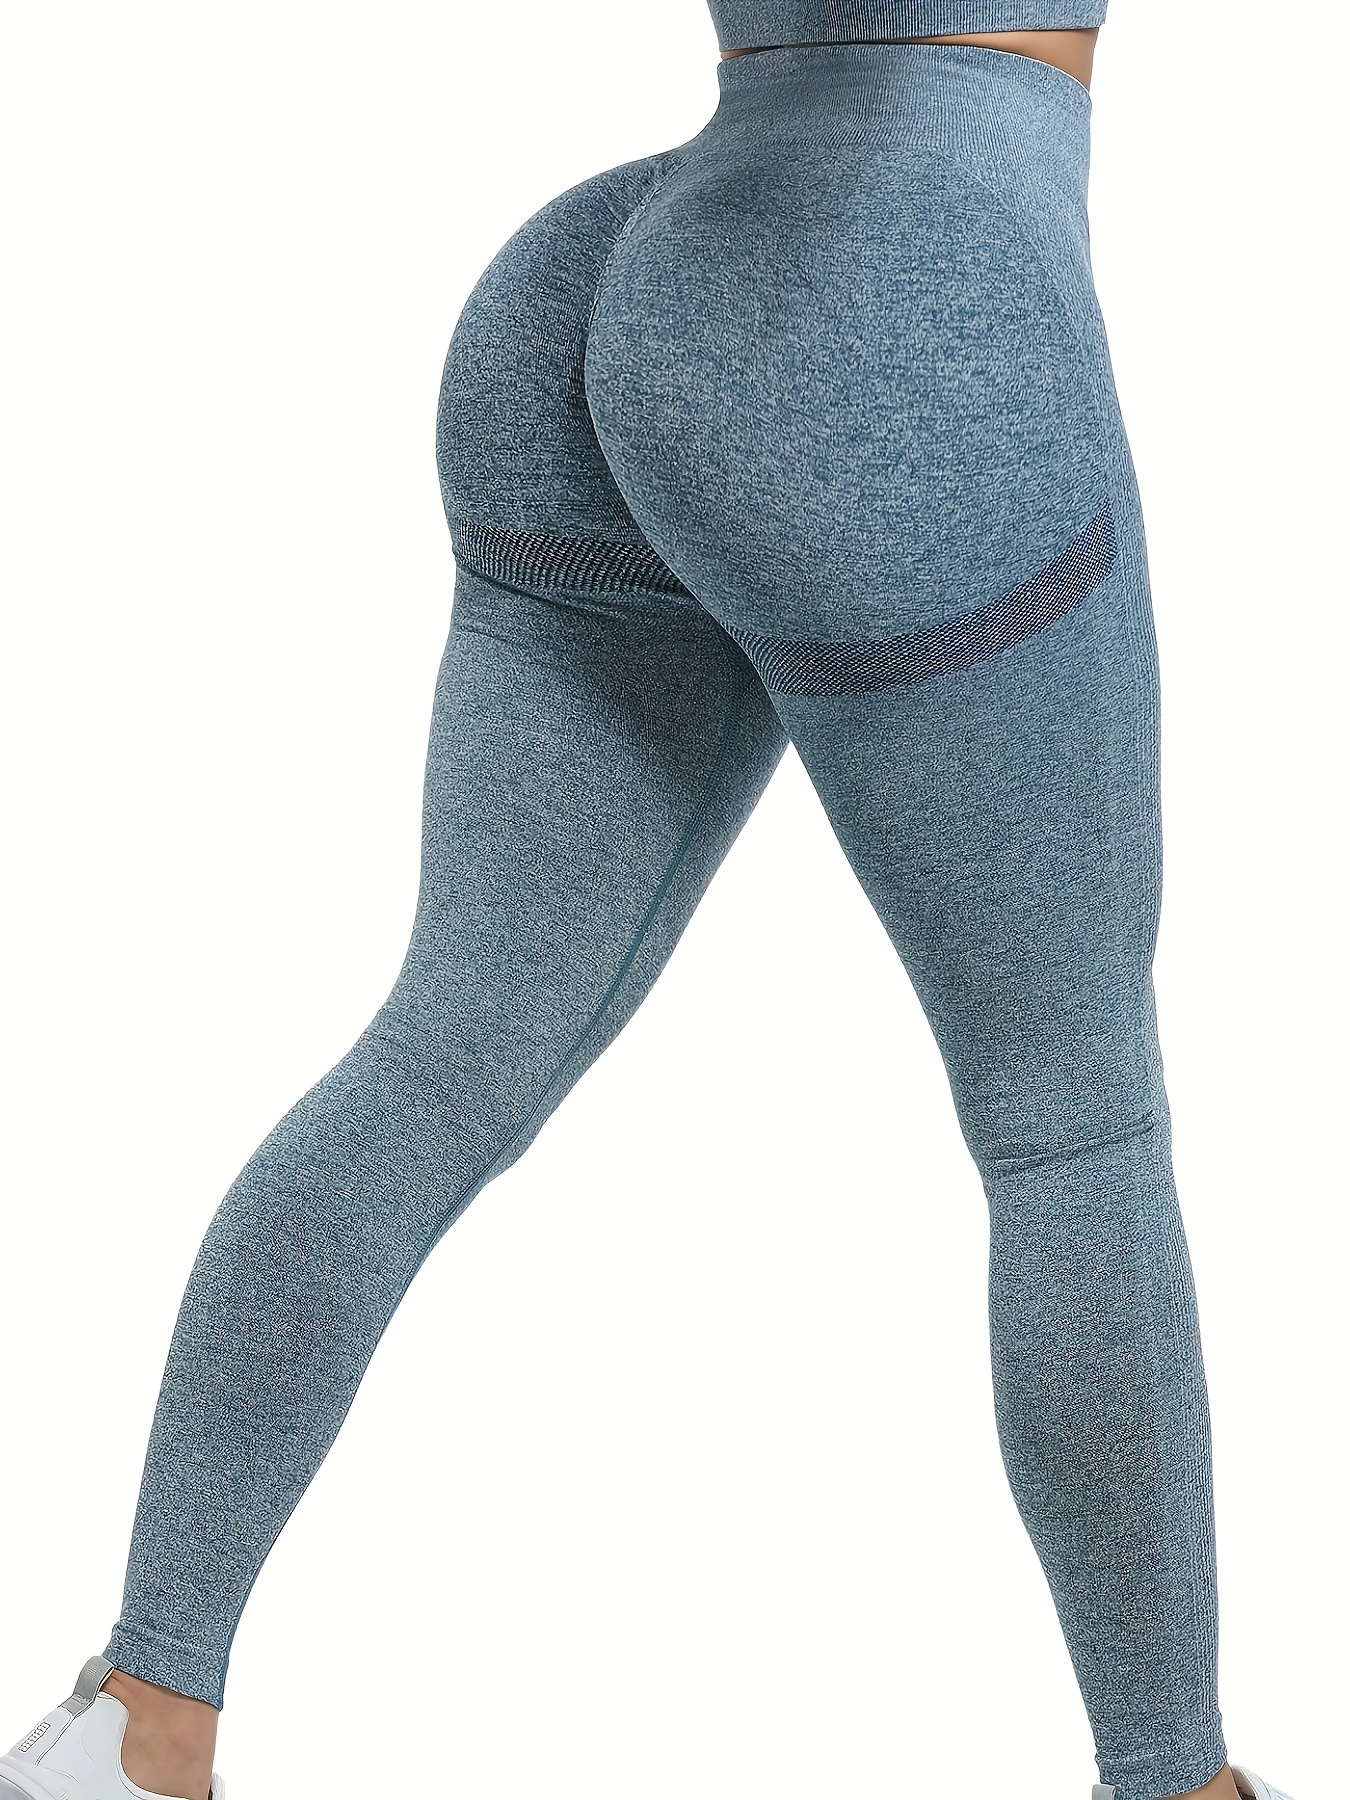 XL Nylon Pocket Women Yoga Pants Leggings Fitness High Waist Long Pants Gym  Hip Push UP Tights Women Gym Workout Sports Leggings